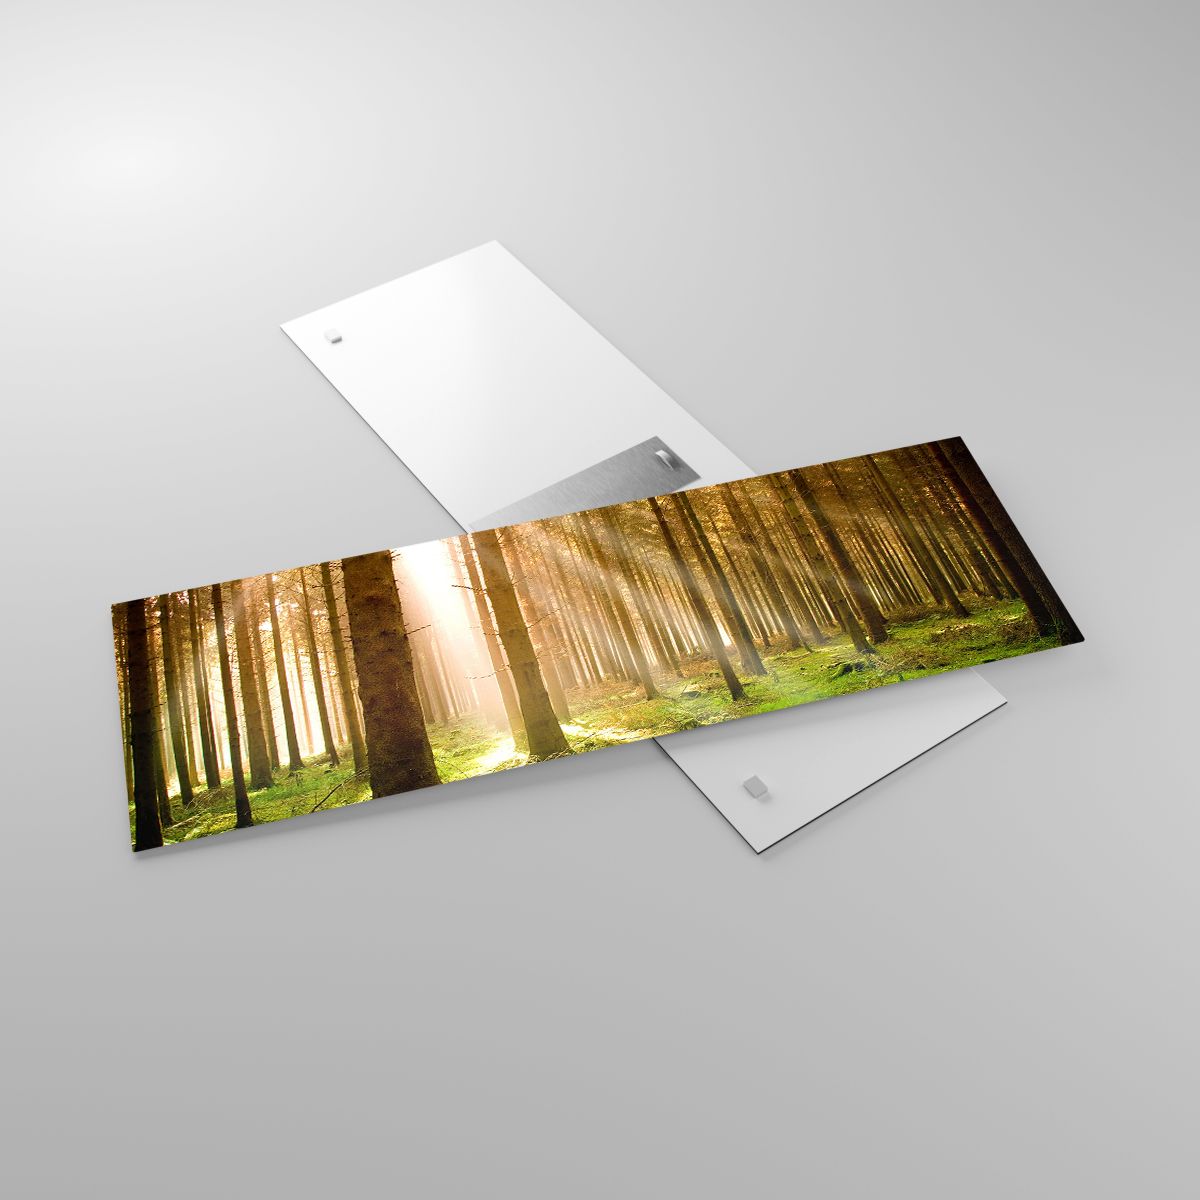 Glasbild Wald, Glasbild Sonnenstrahlen, Glasbild Natur, Glasbild Landschaft, Glasbild Landschaft